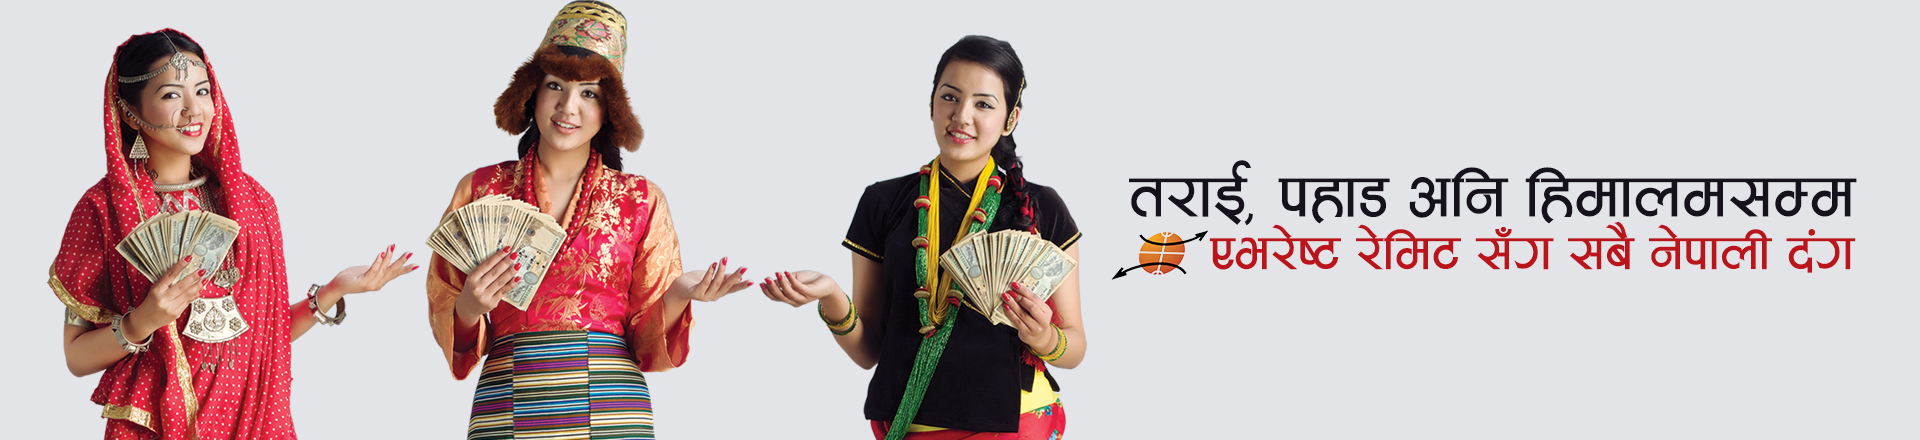 nepal indo india remittance send money savings